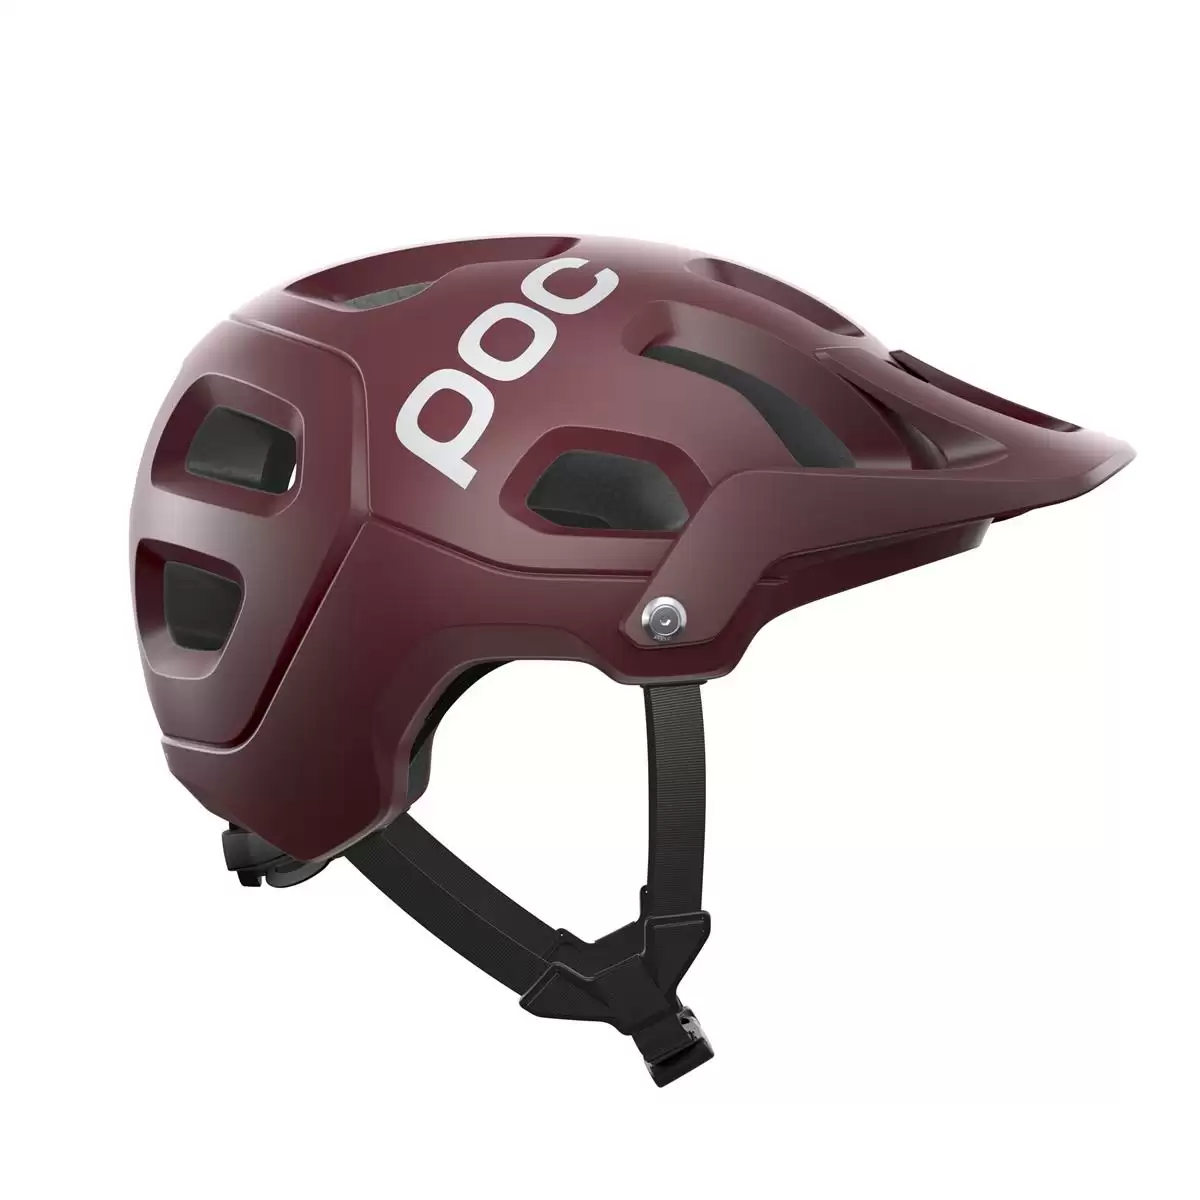 Enduro Helmet Tectal Propylene Red Matt size XS-S (51-54cm) #3